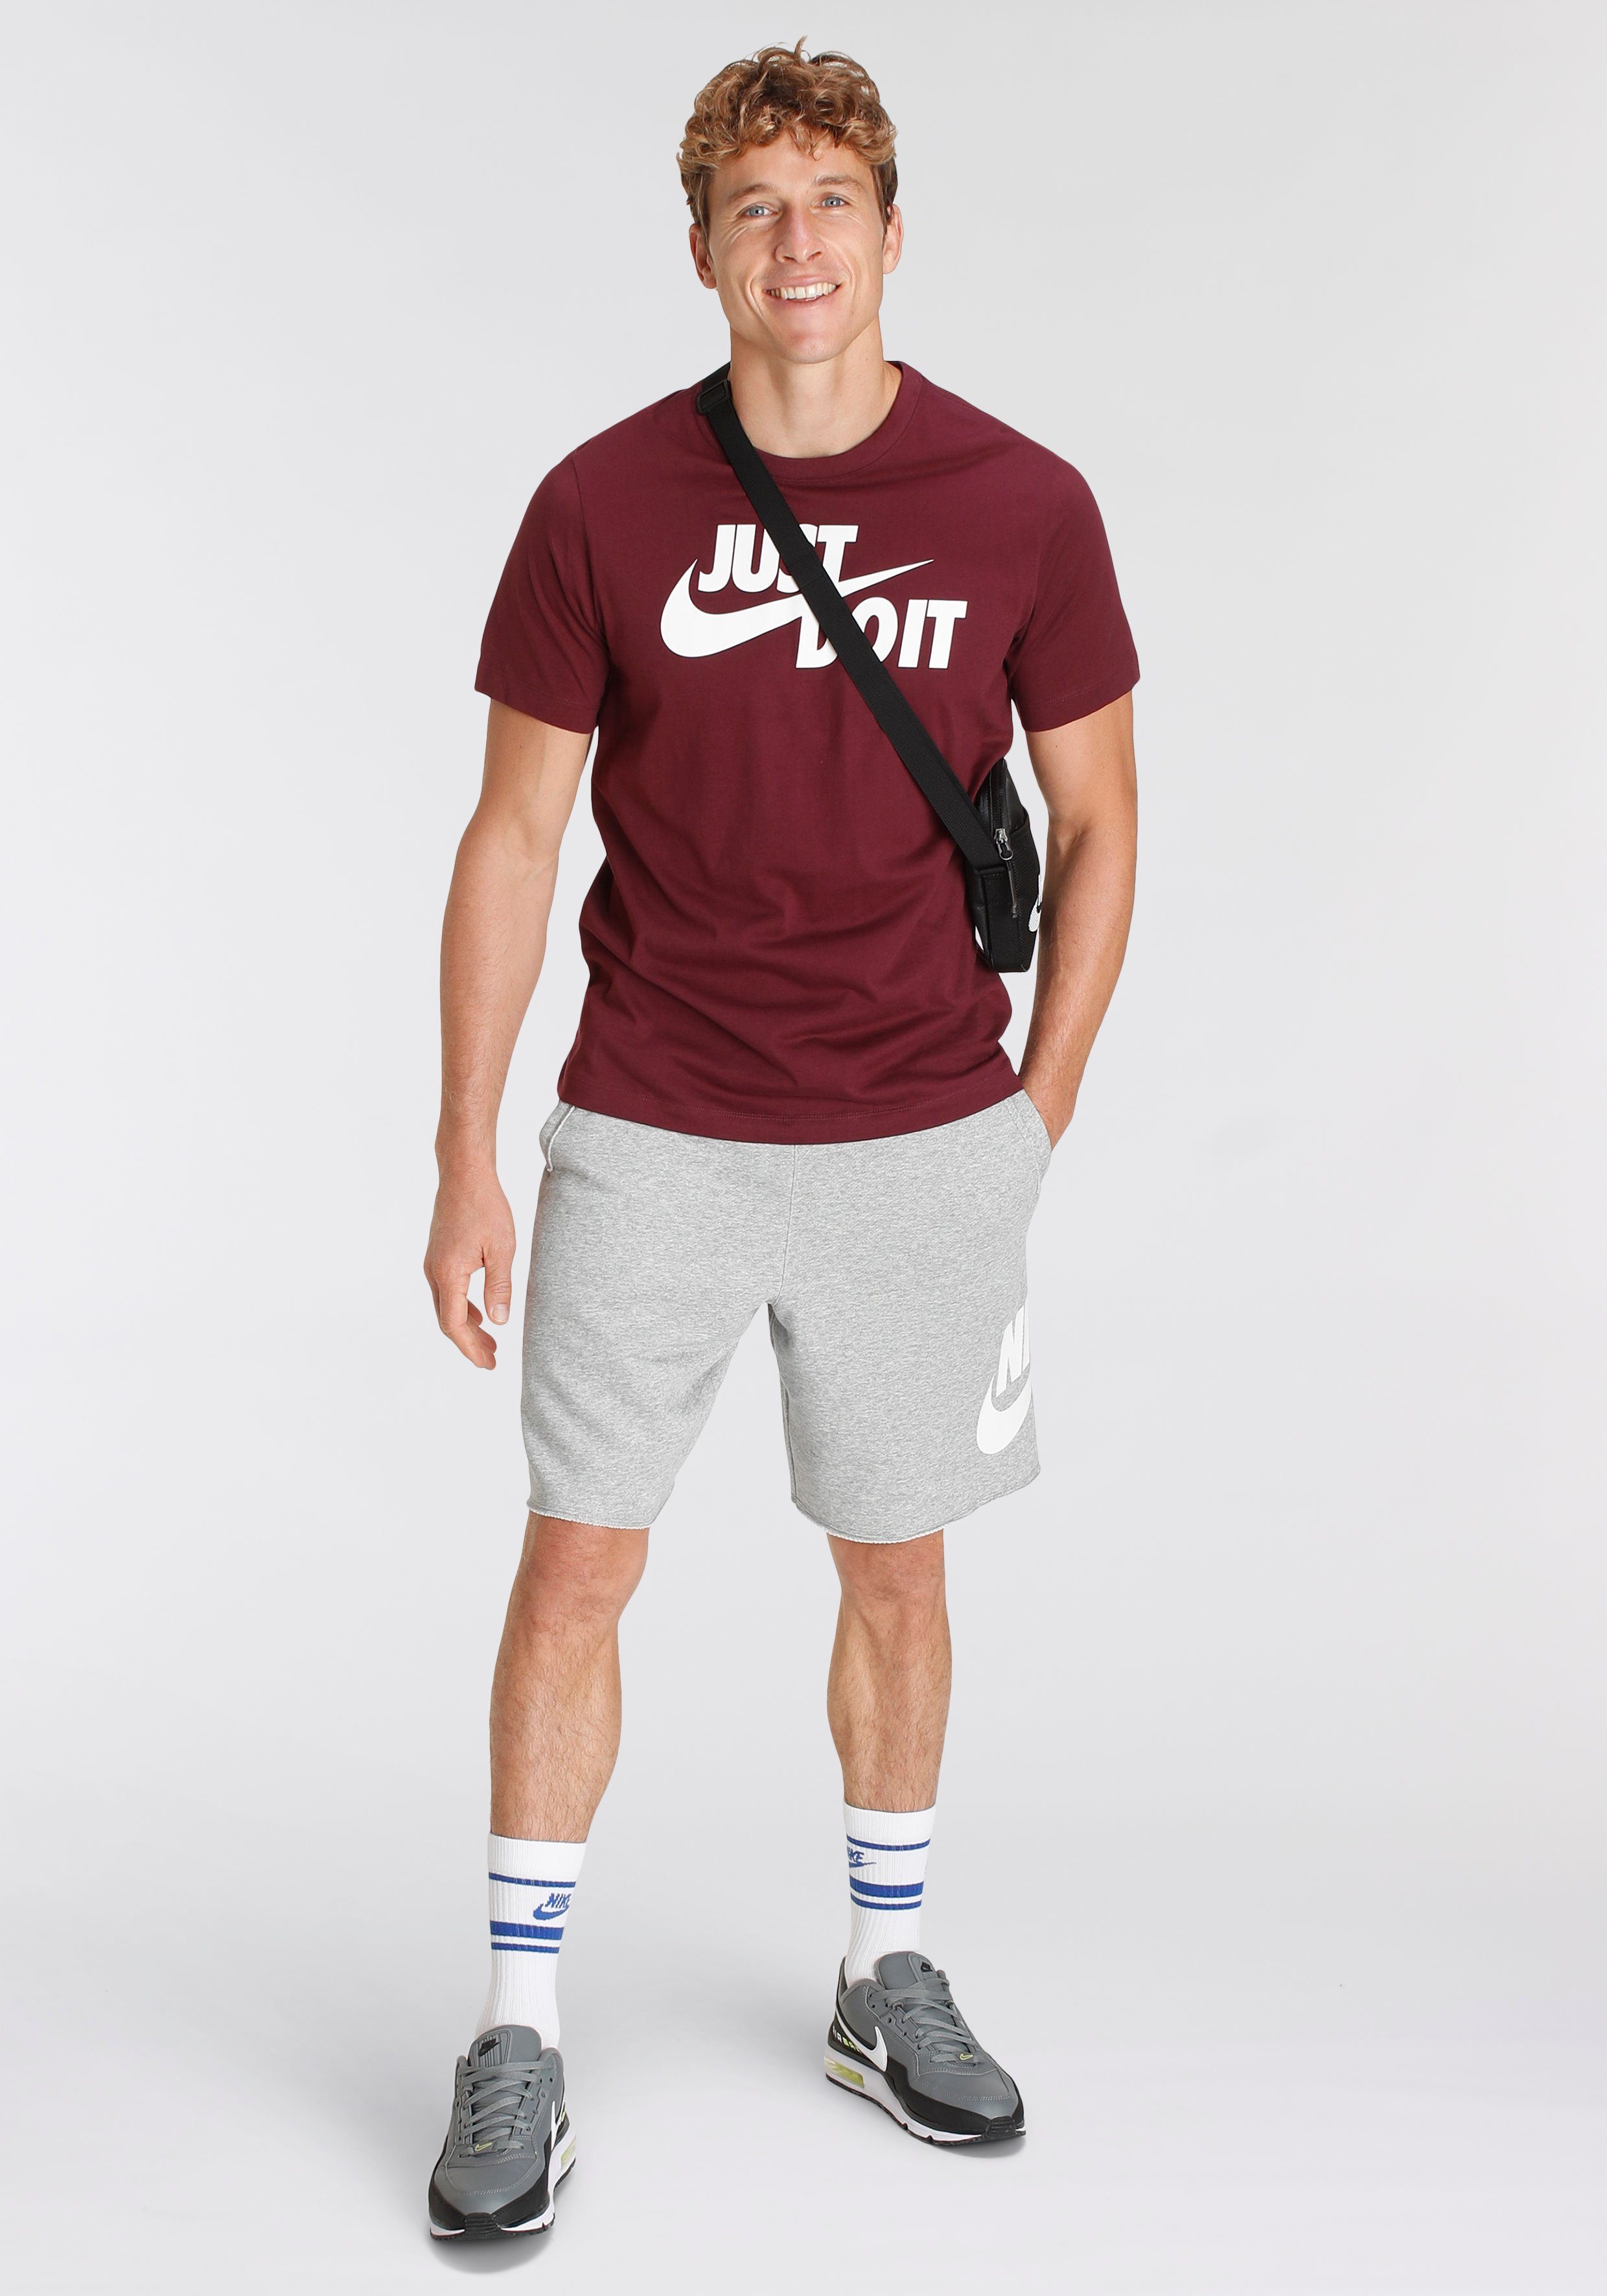 JDI MEN'S Sportswear NIGHT T-SHIRT MAROON T-Shirt Nike